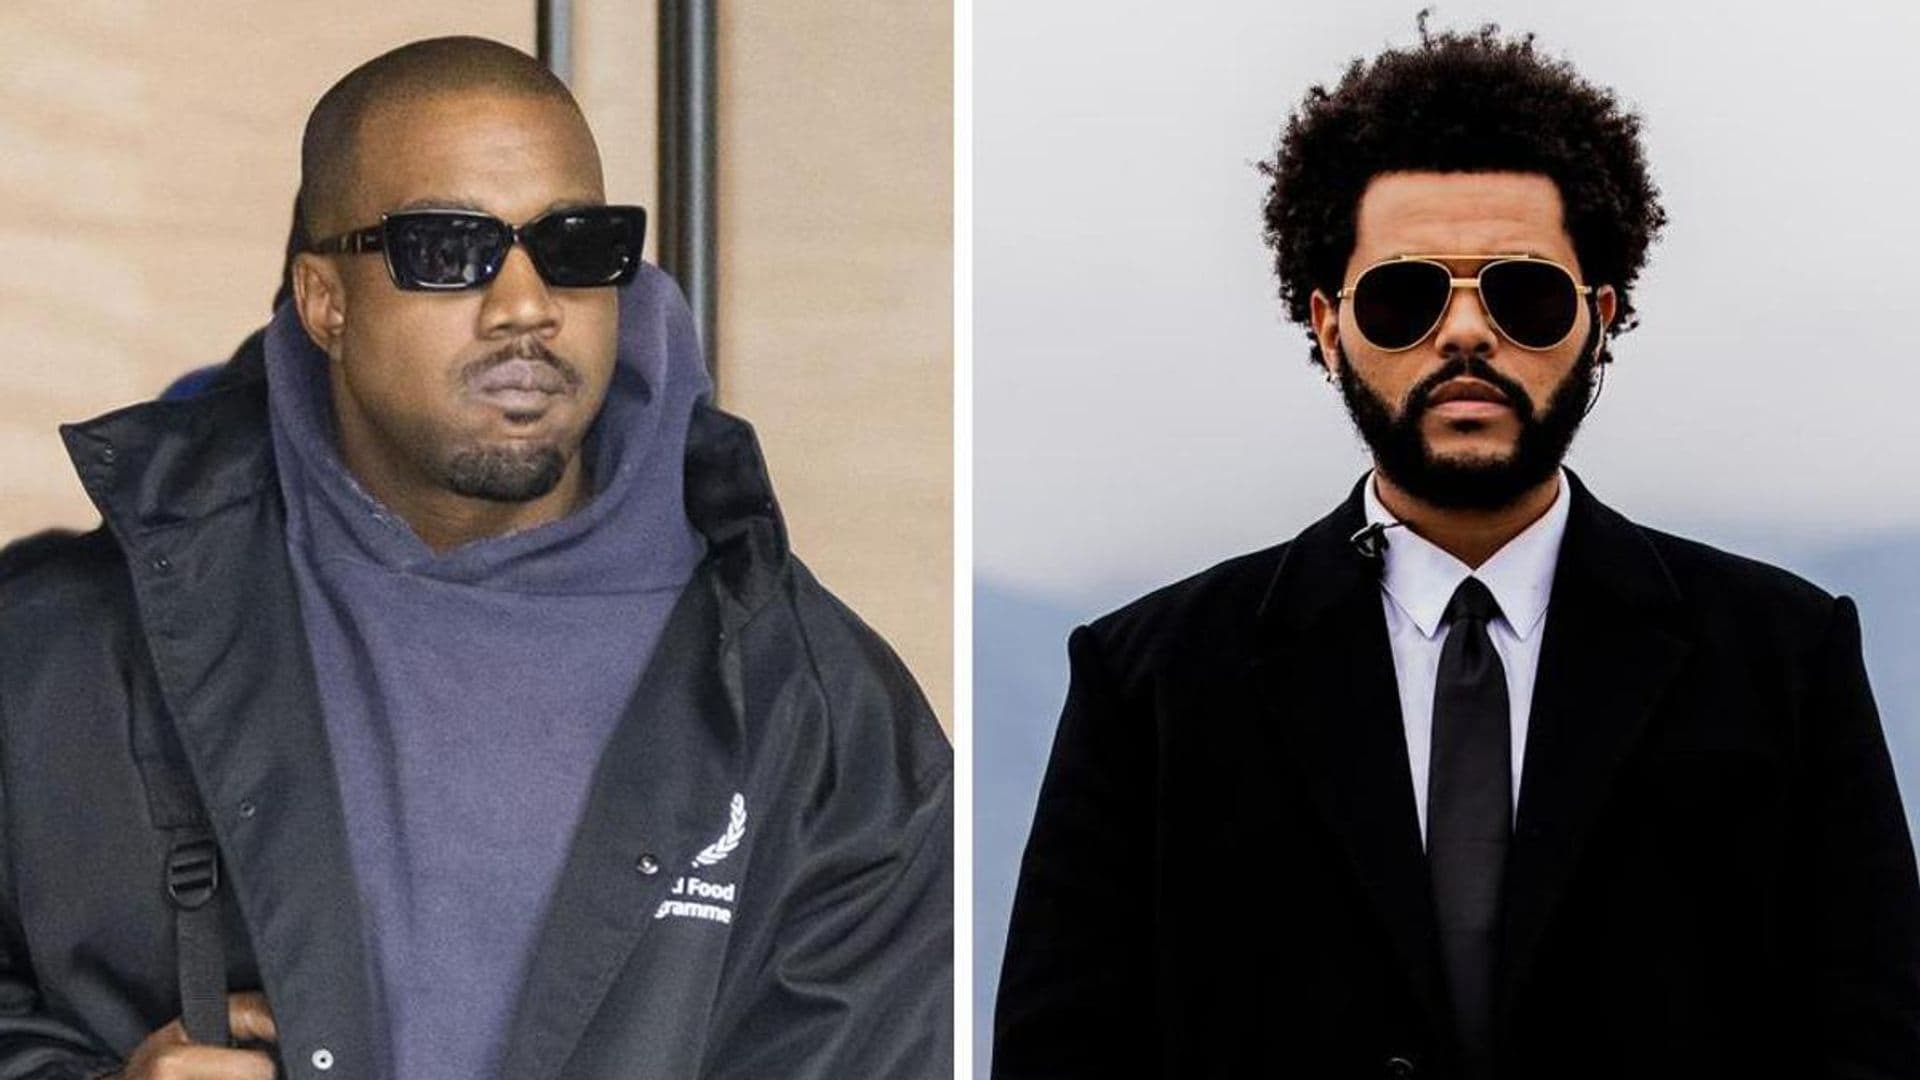 Coachella drama! The Weeknd demands he’s paid the same as Kanye West: $8.5 million